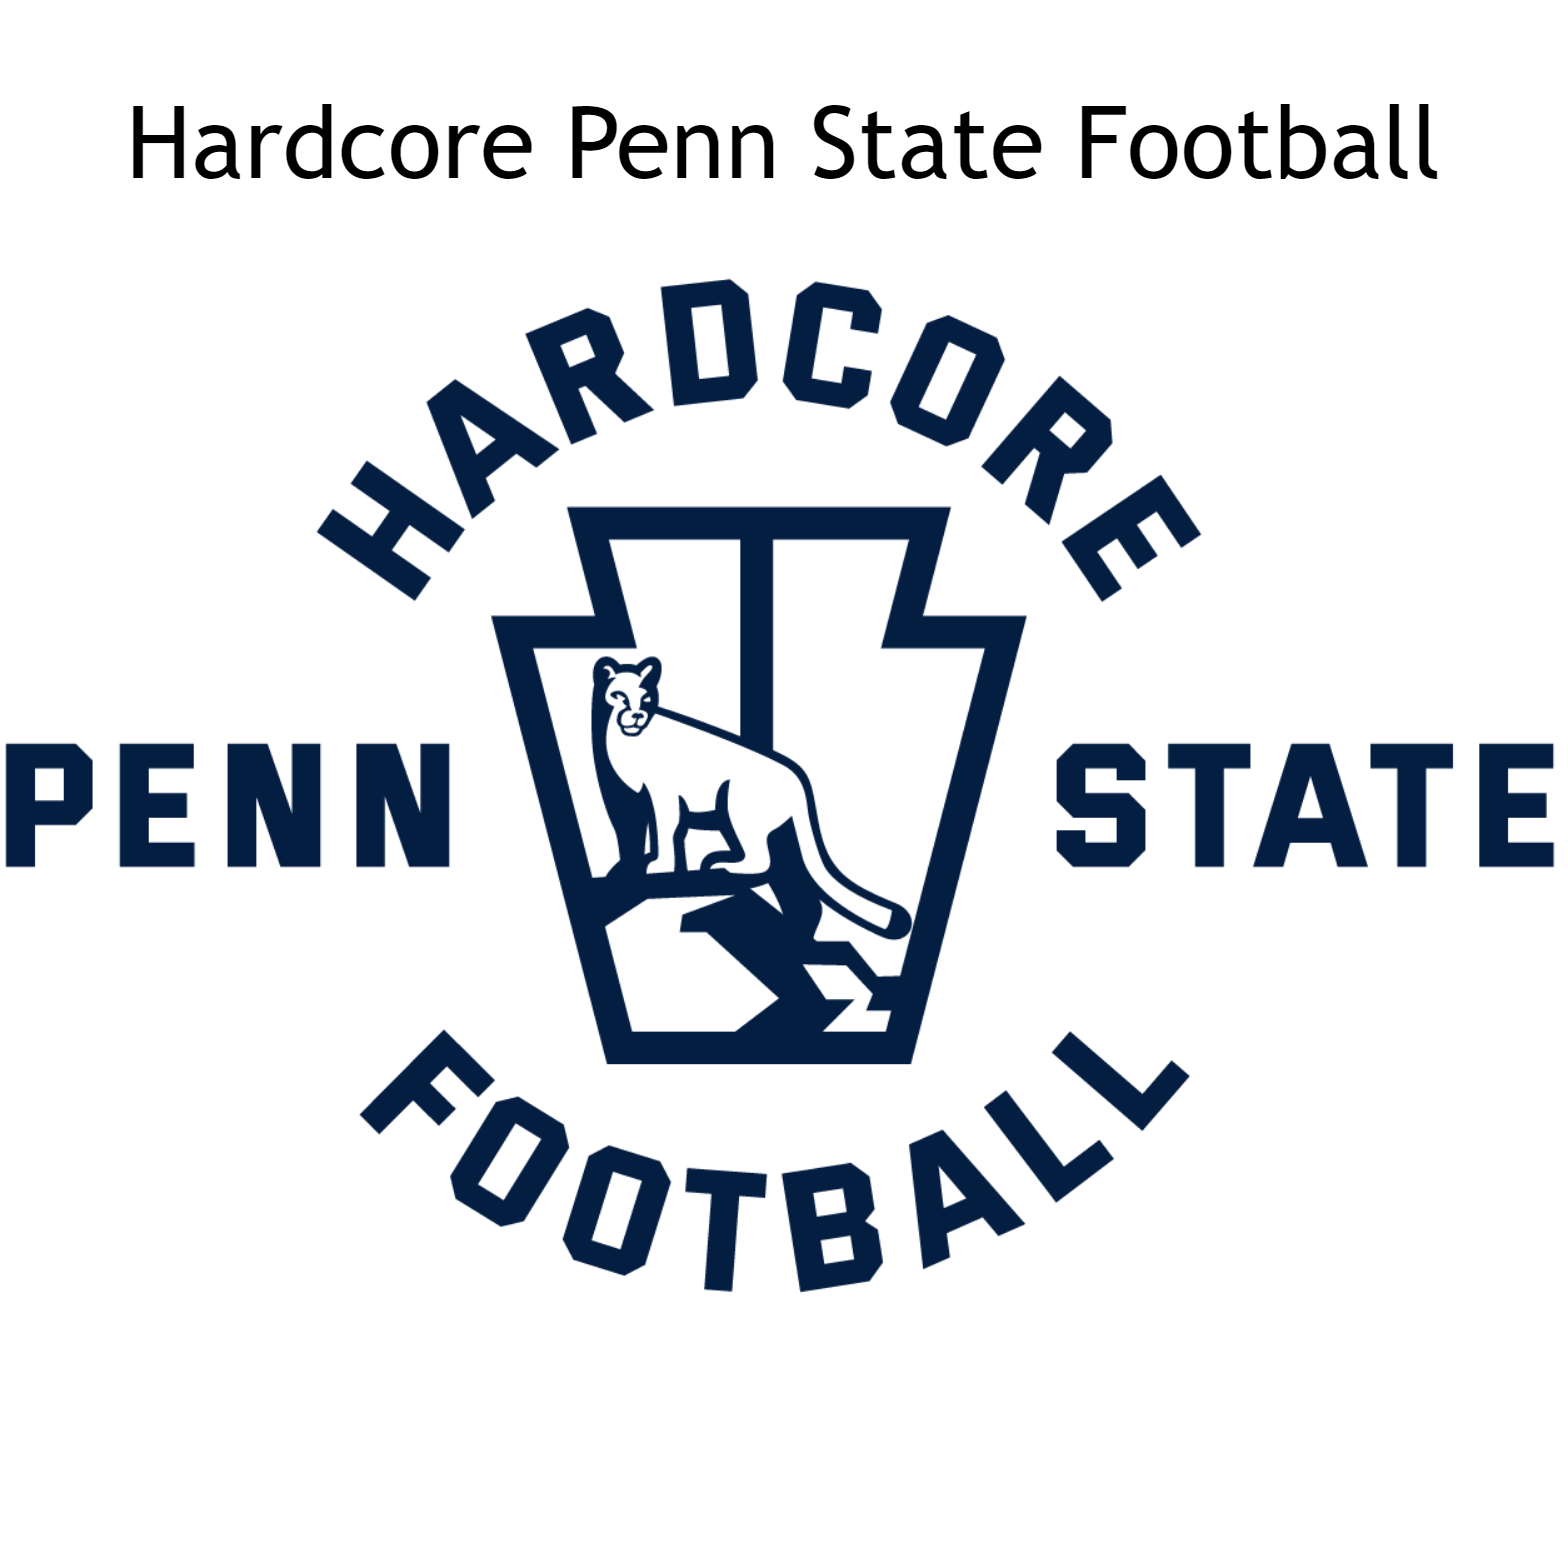 Hardcore Penn State Football